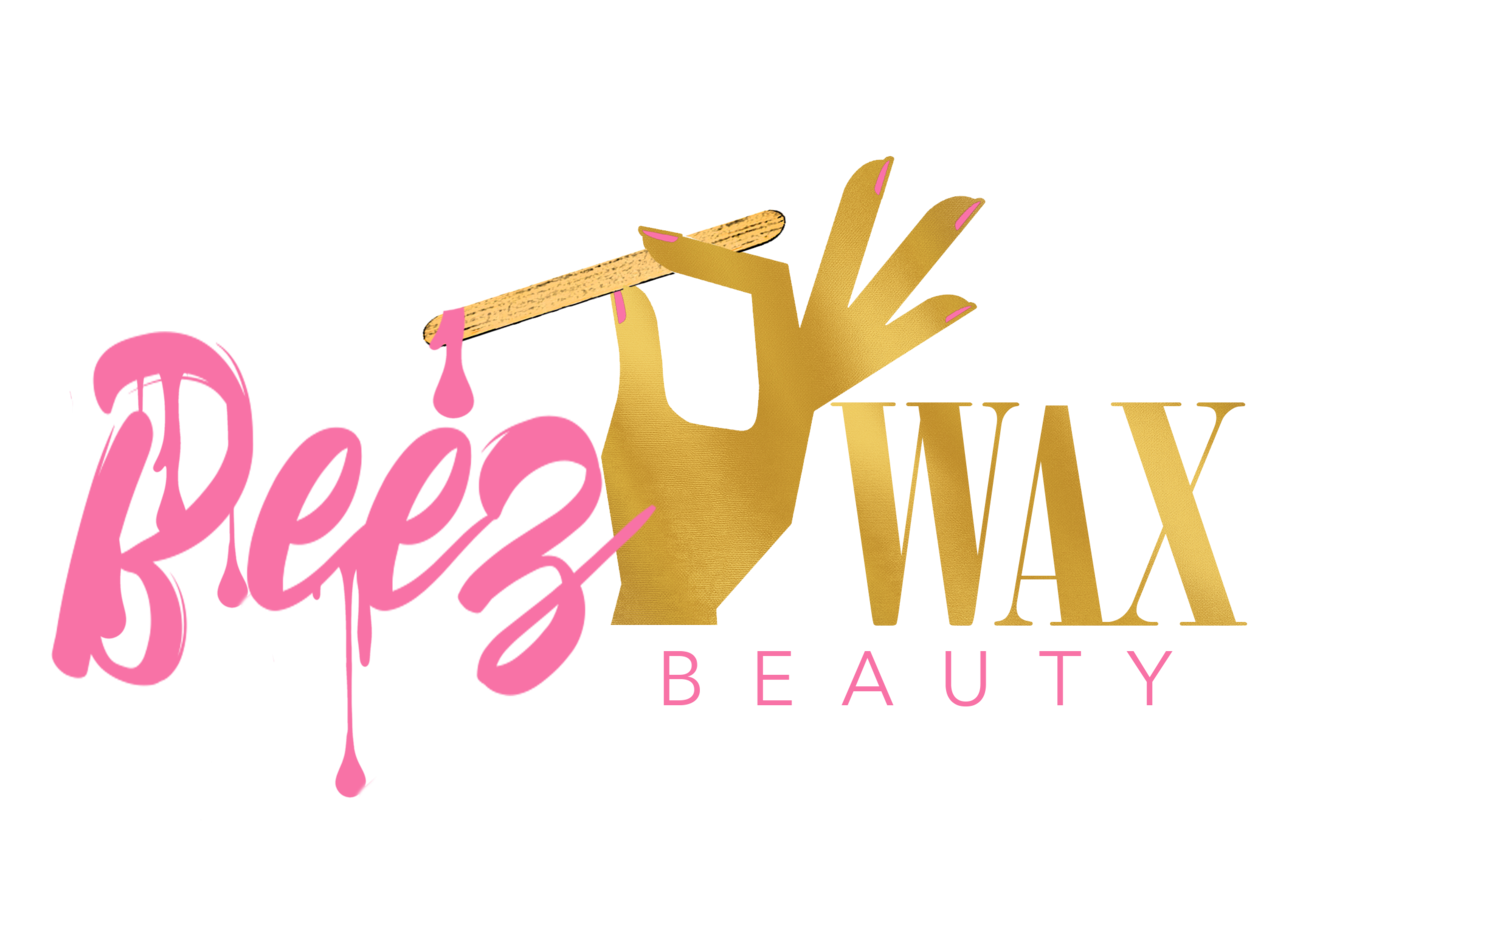 BeezWax Beauty